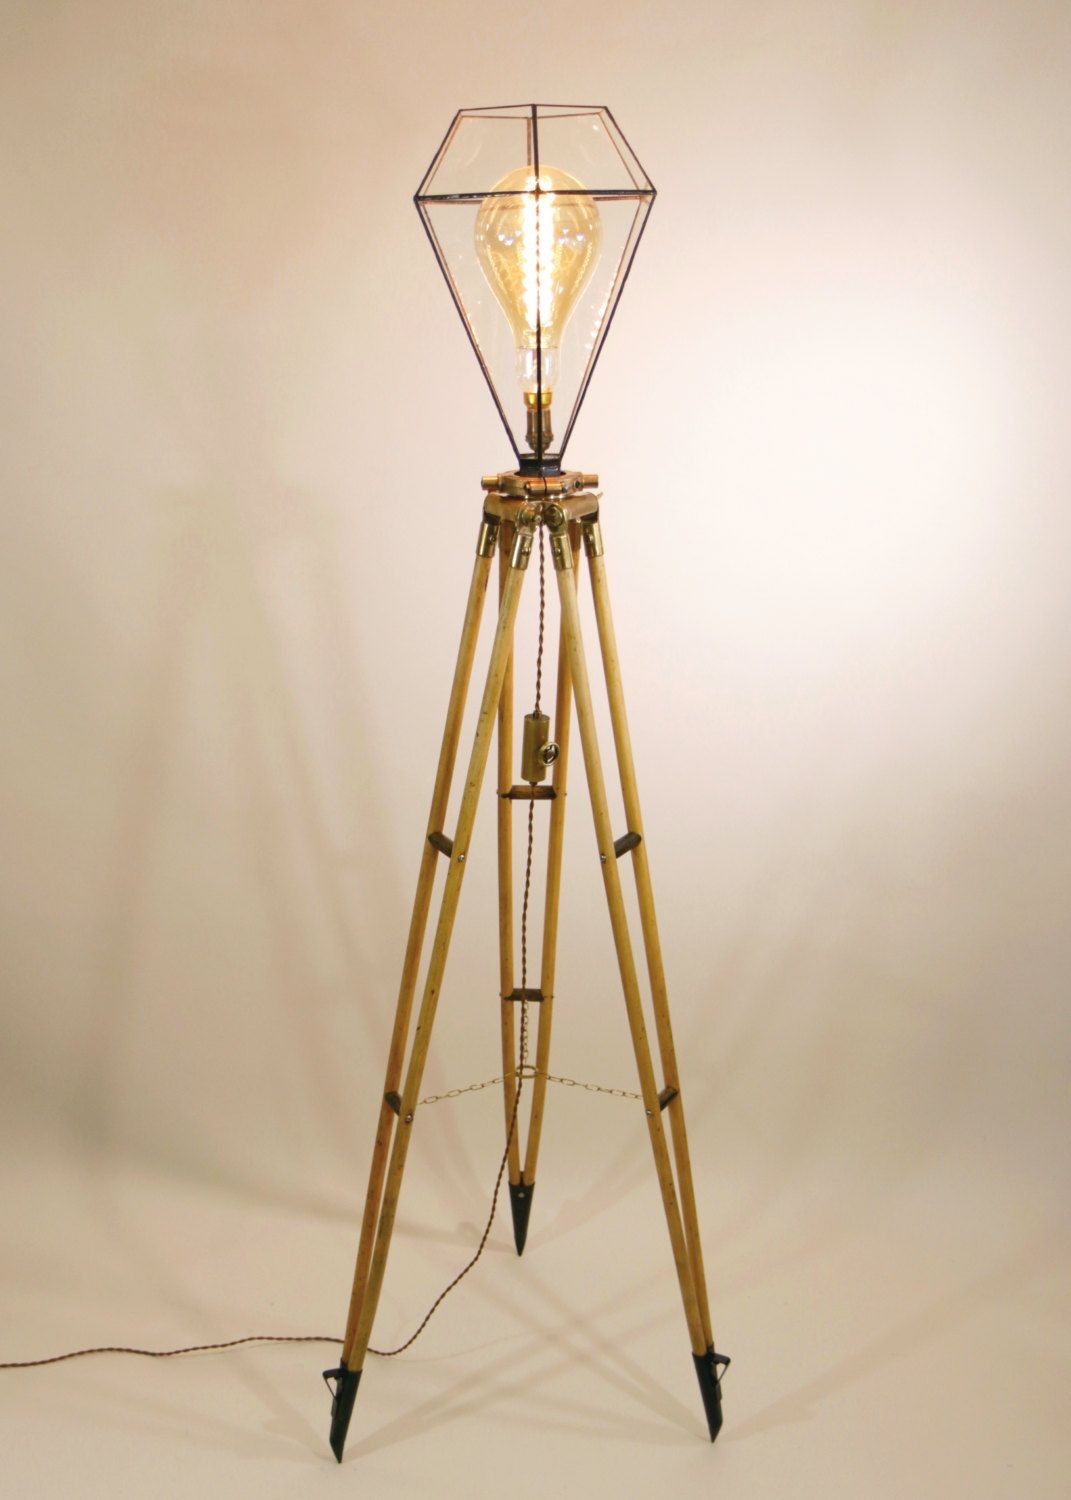 Vintage Surveyor s Tripod Floor Lamp Surveying Stand Lamp Oak & Brass Light Tripod